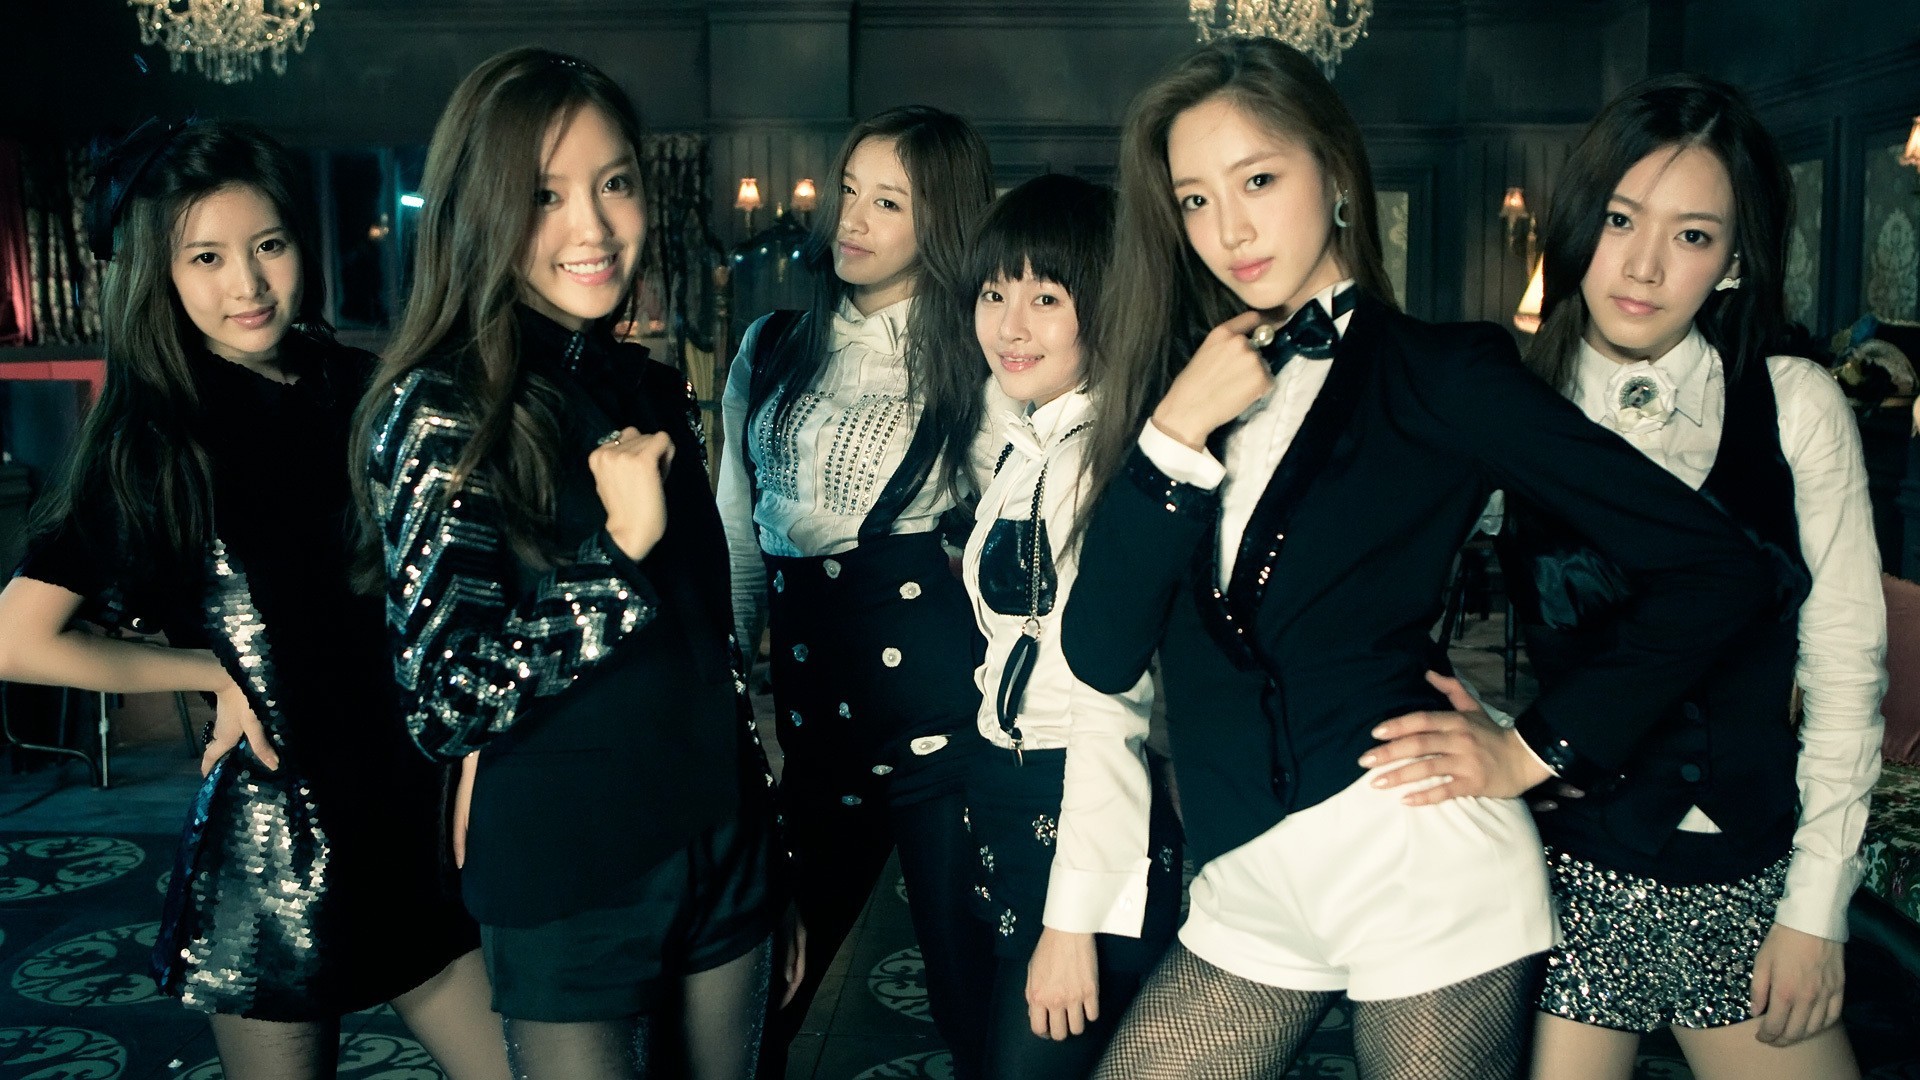 General 1920x1080 Korean T-ara women music Korean women group of women smiling women indoors looking at viewer brunette hands on hips long hair